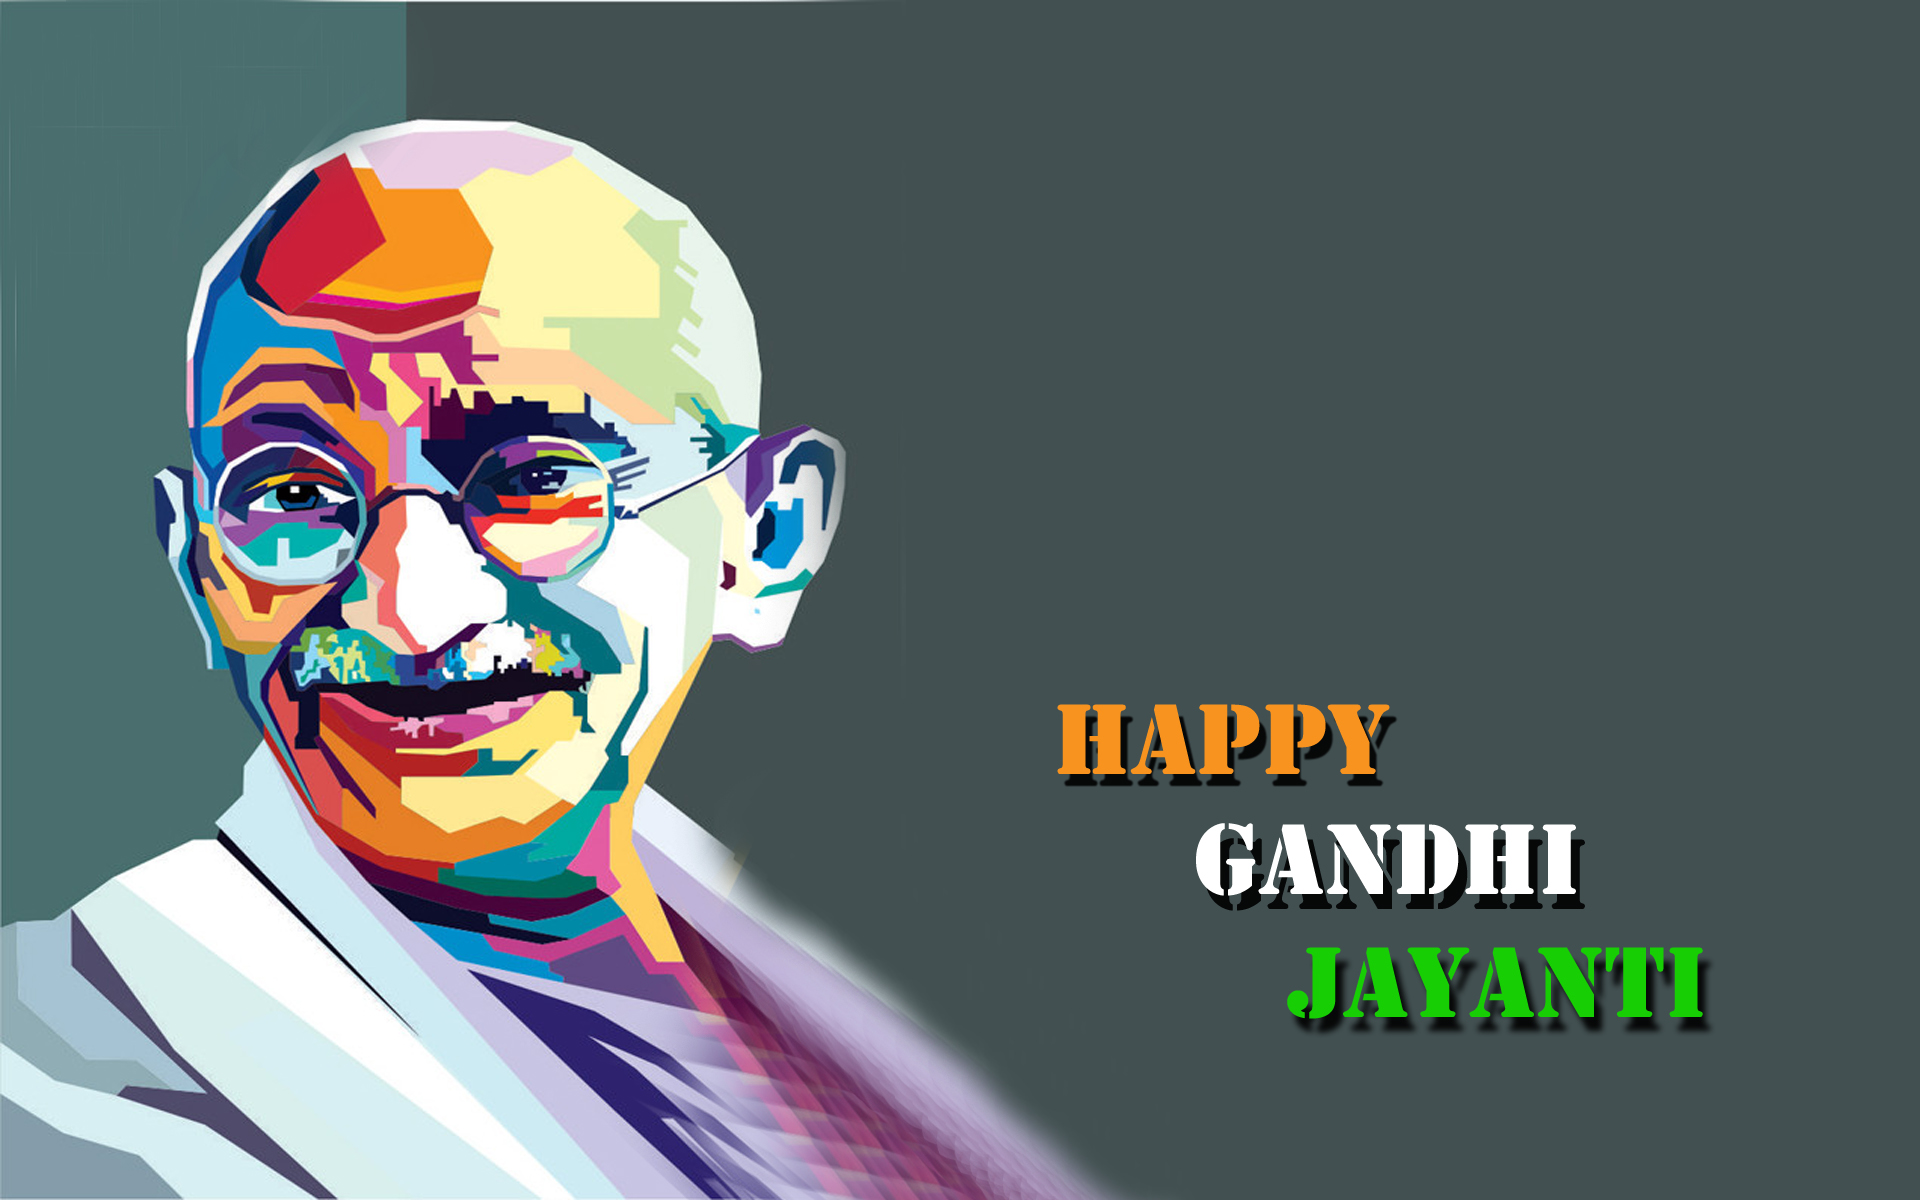 Mahatma Gandhi Jayanti Wishes HD Image For WhatsApp & Facebook 